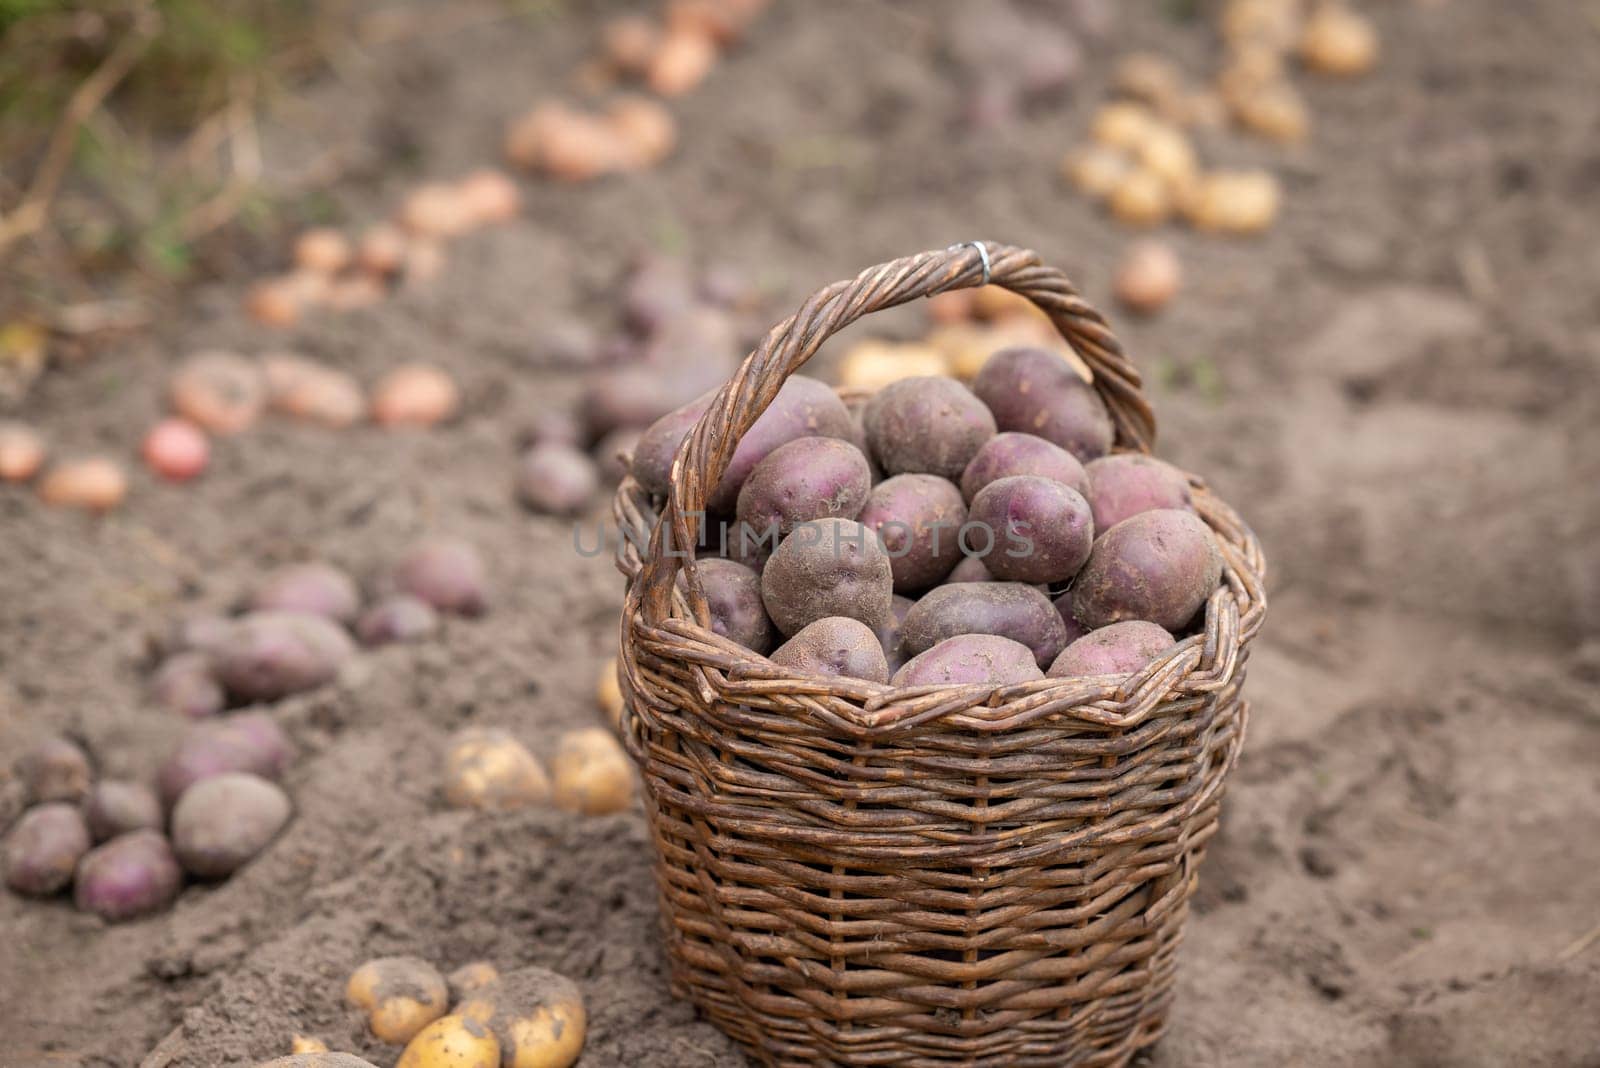 Potato crop in Autumn, nice harvest of potato in garden